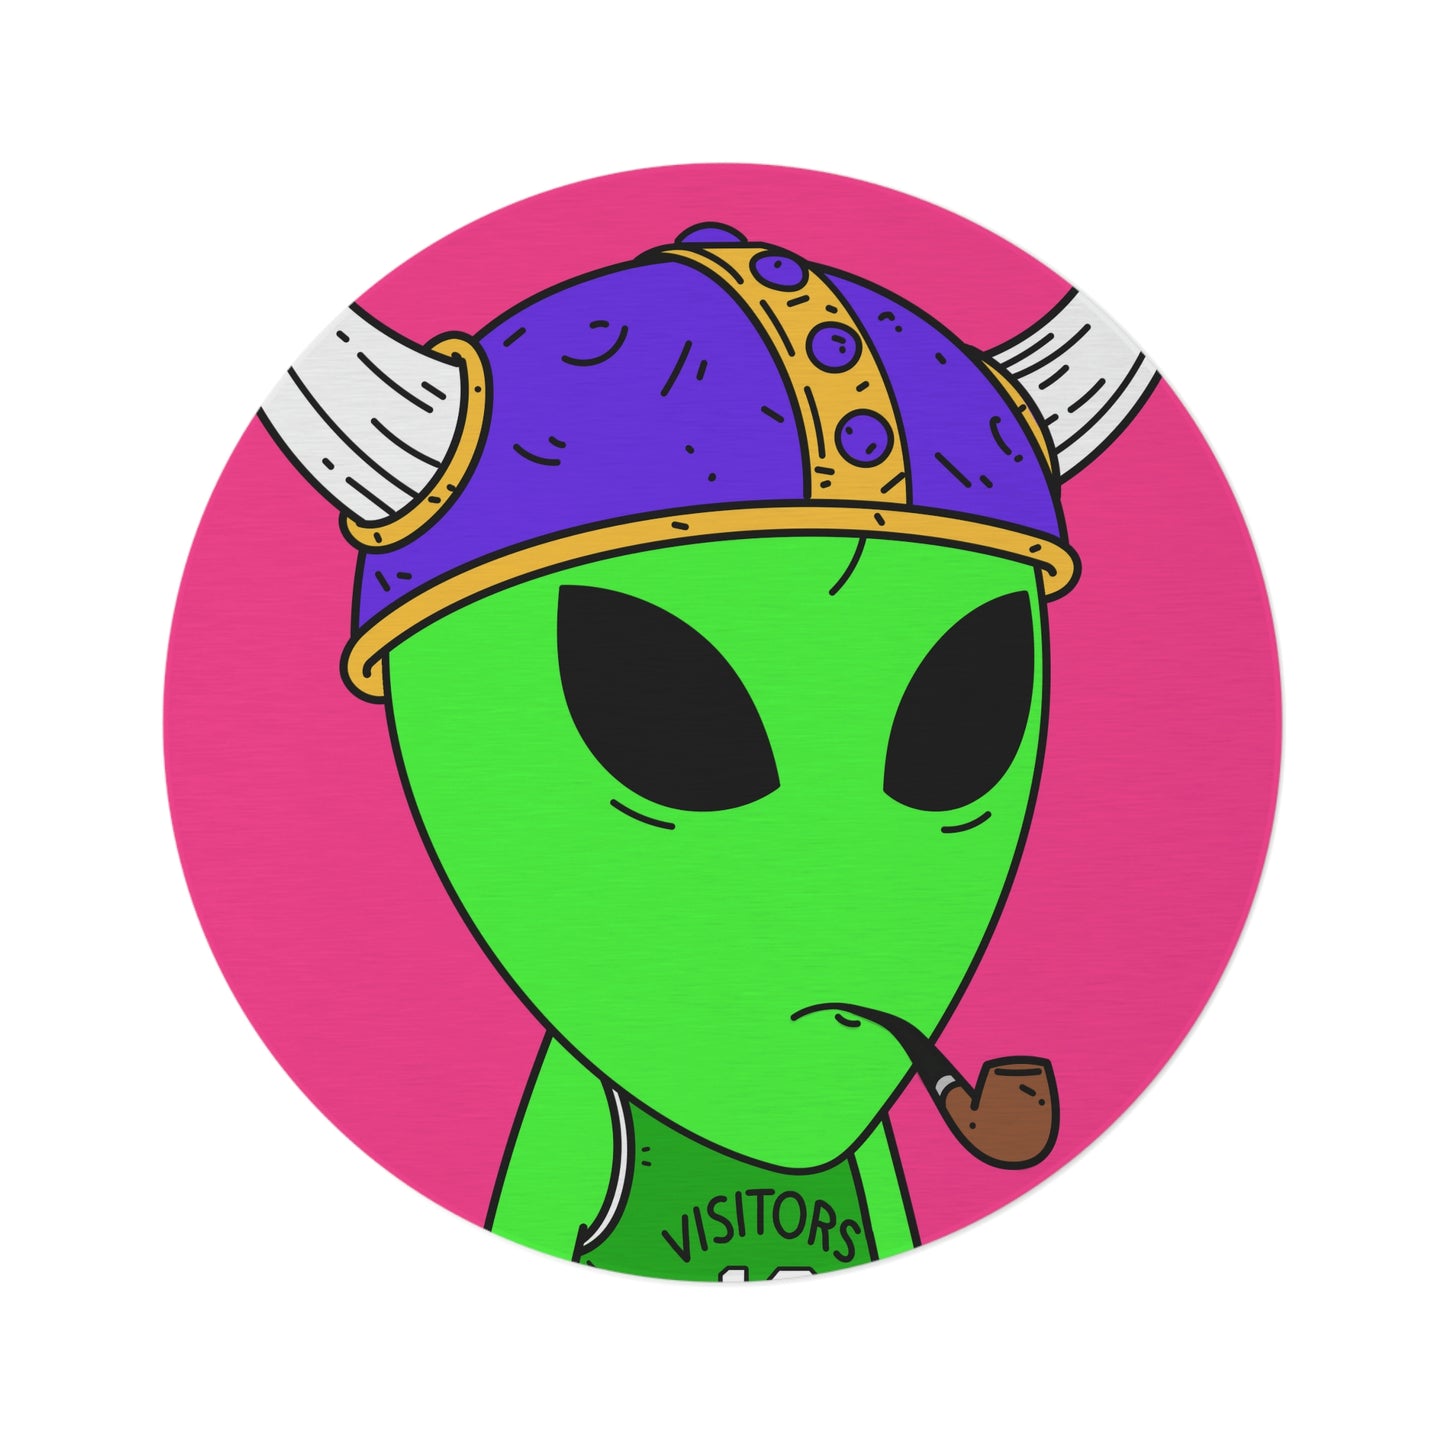 Green Visi Jersey Purple Viking Helmet Pipe Alien Visitor Round Rug - Visitor751